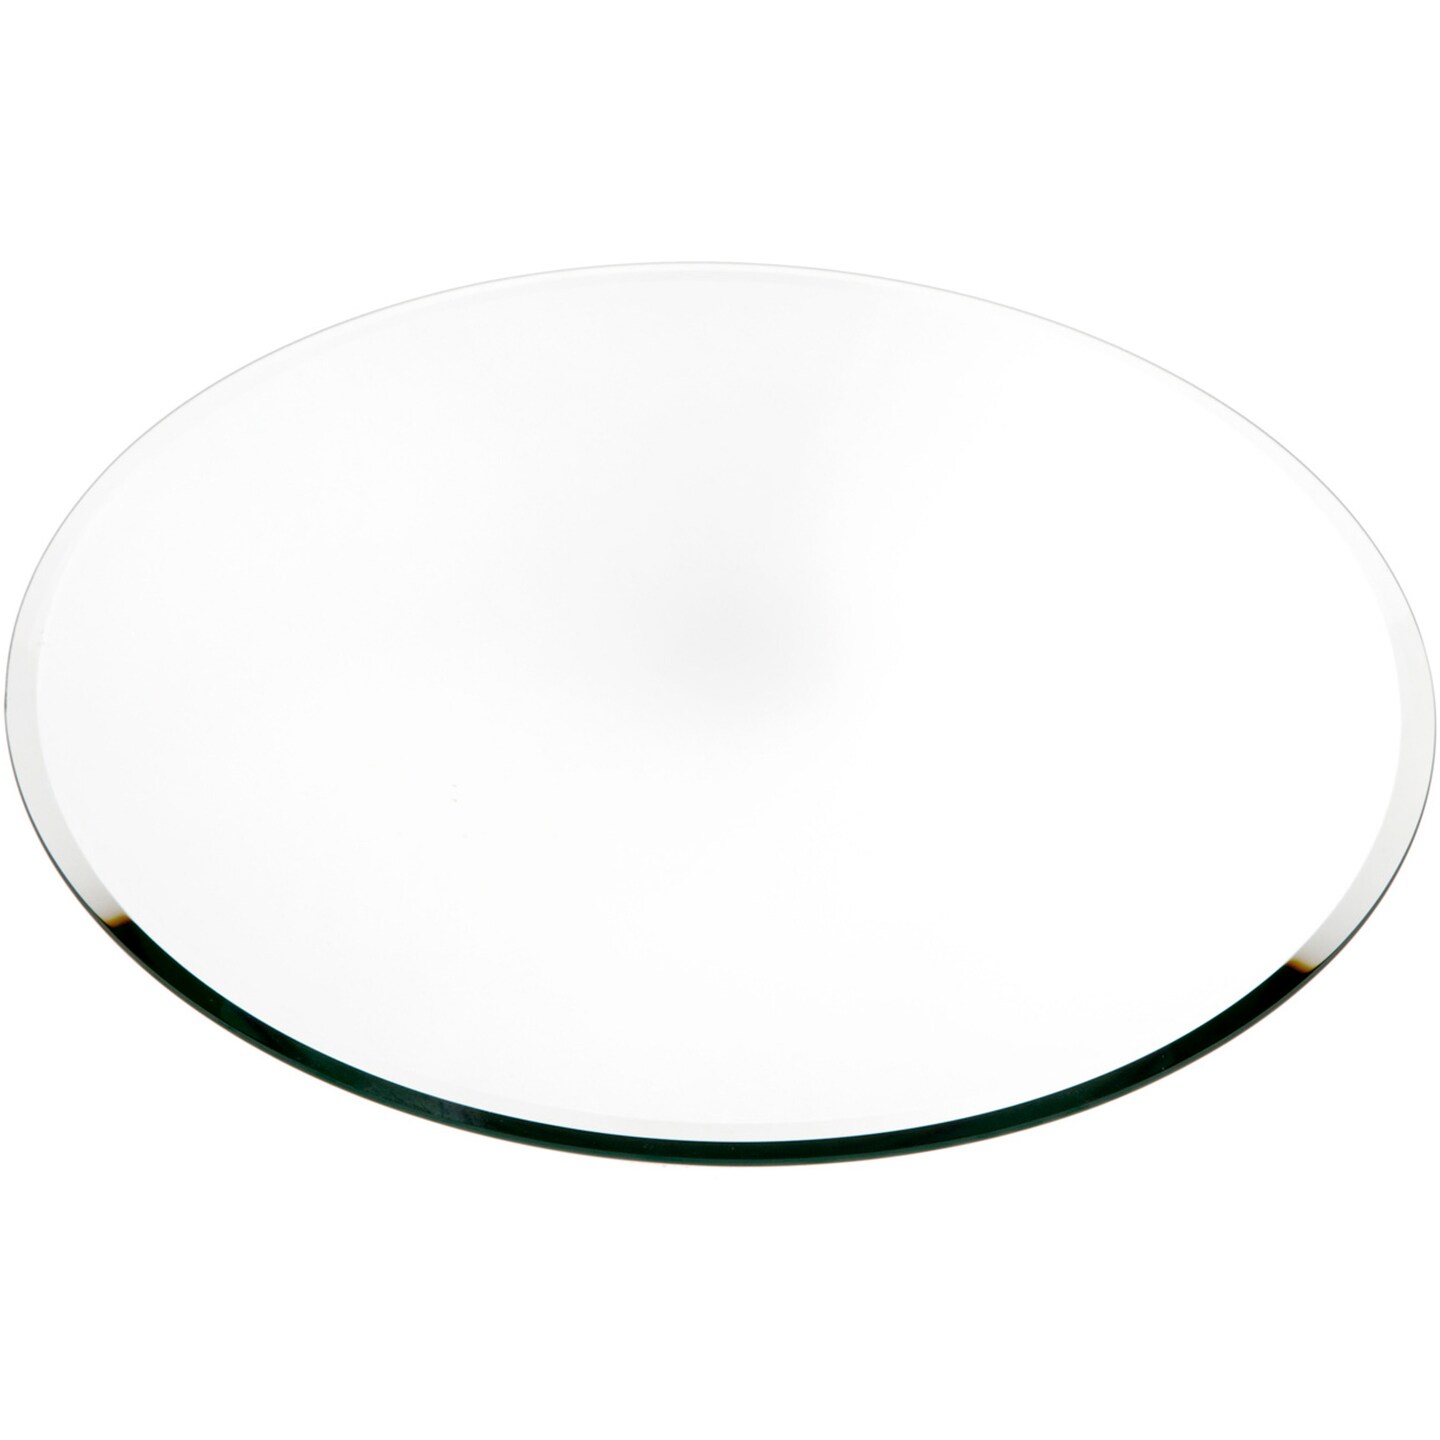 Plymor Round 5mm Beveled Glass Mirror, 20 inch x 20 inch